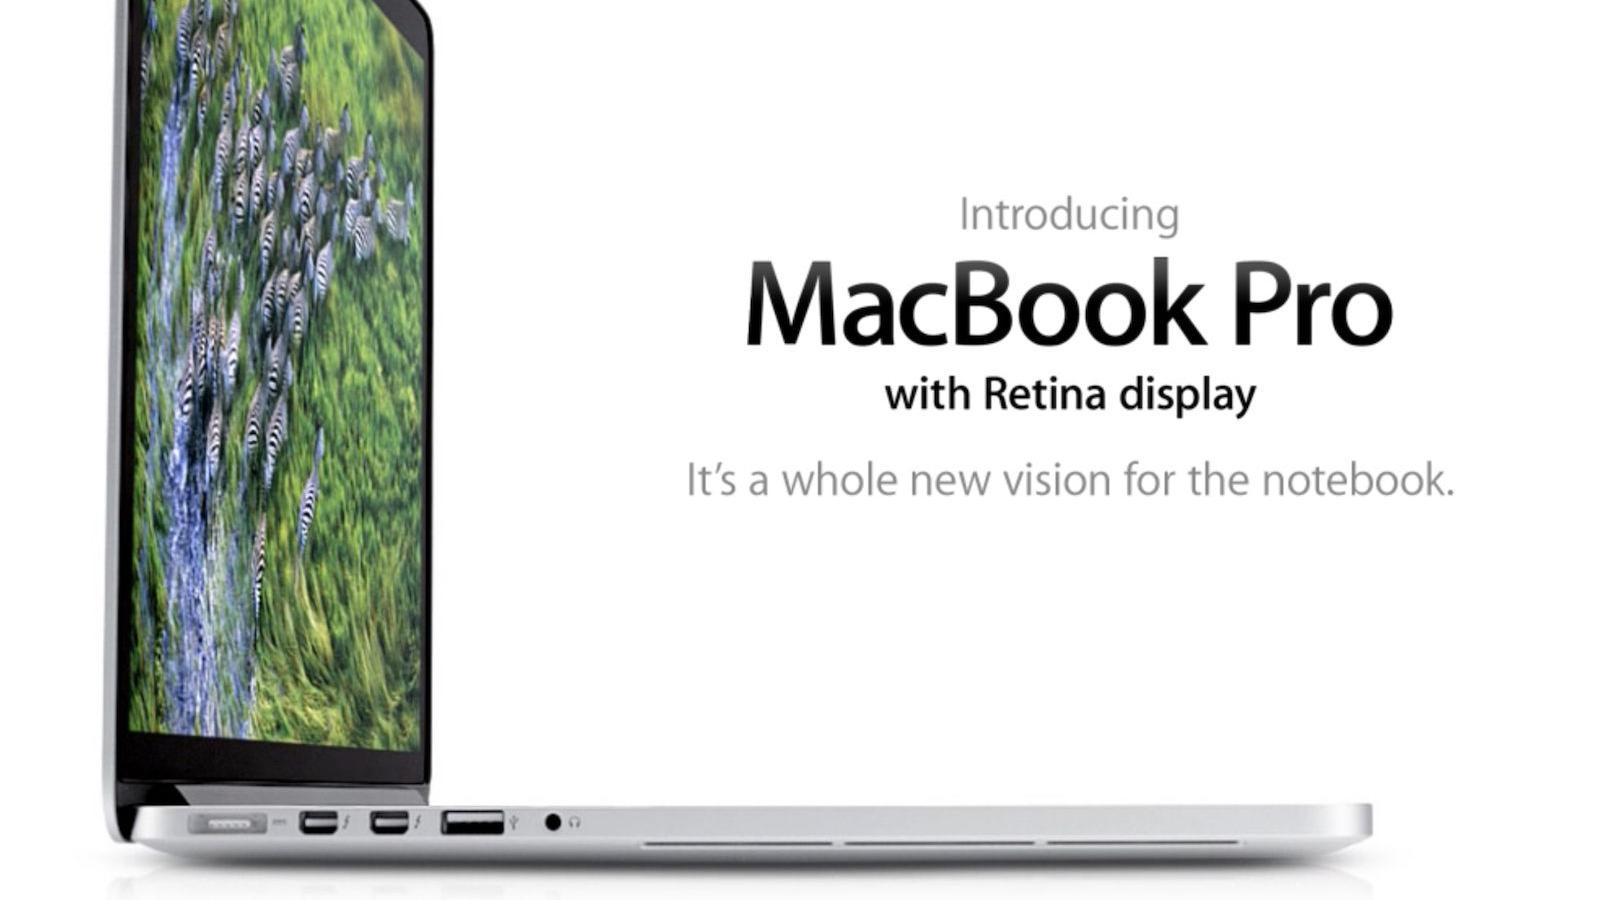 MacBook Pro|苹果宣布首款配备视网膜显示屏的MacBook Pro机型10周年